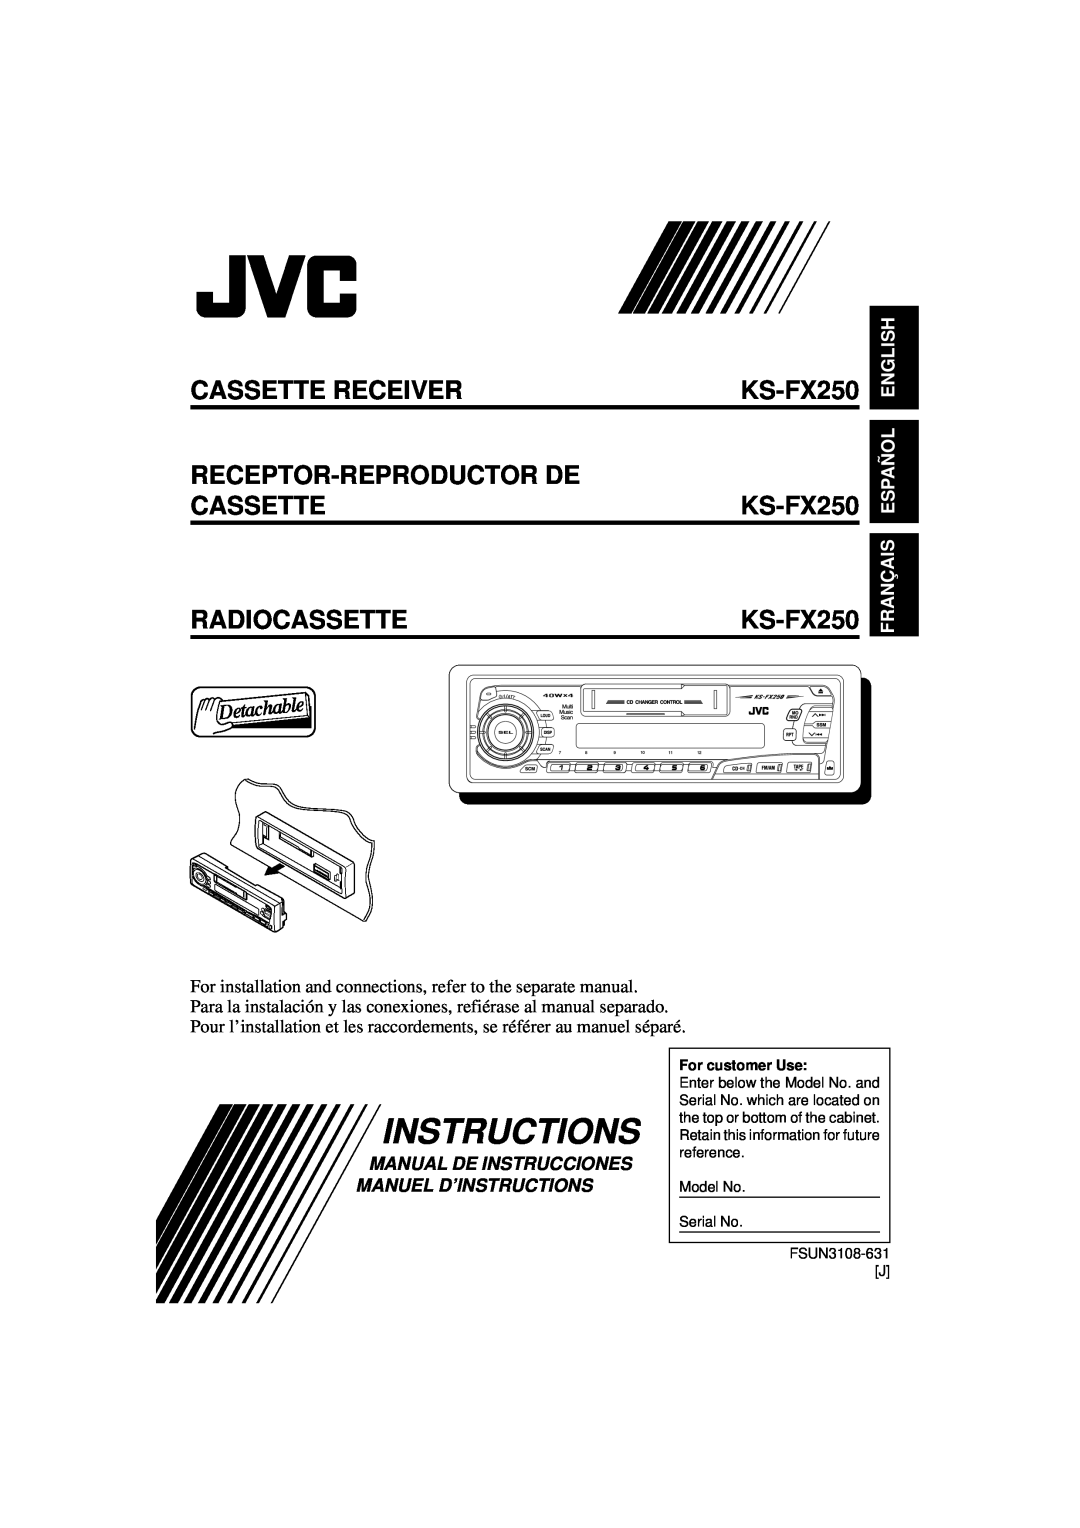 JVC KS-FX250 manual Instructions, Franç Ais Español English, Cassette Receiver Receptor-Reproductorde Cassette 